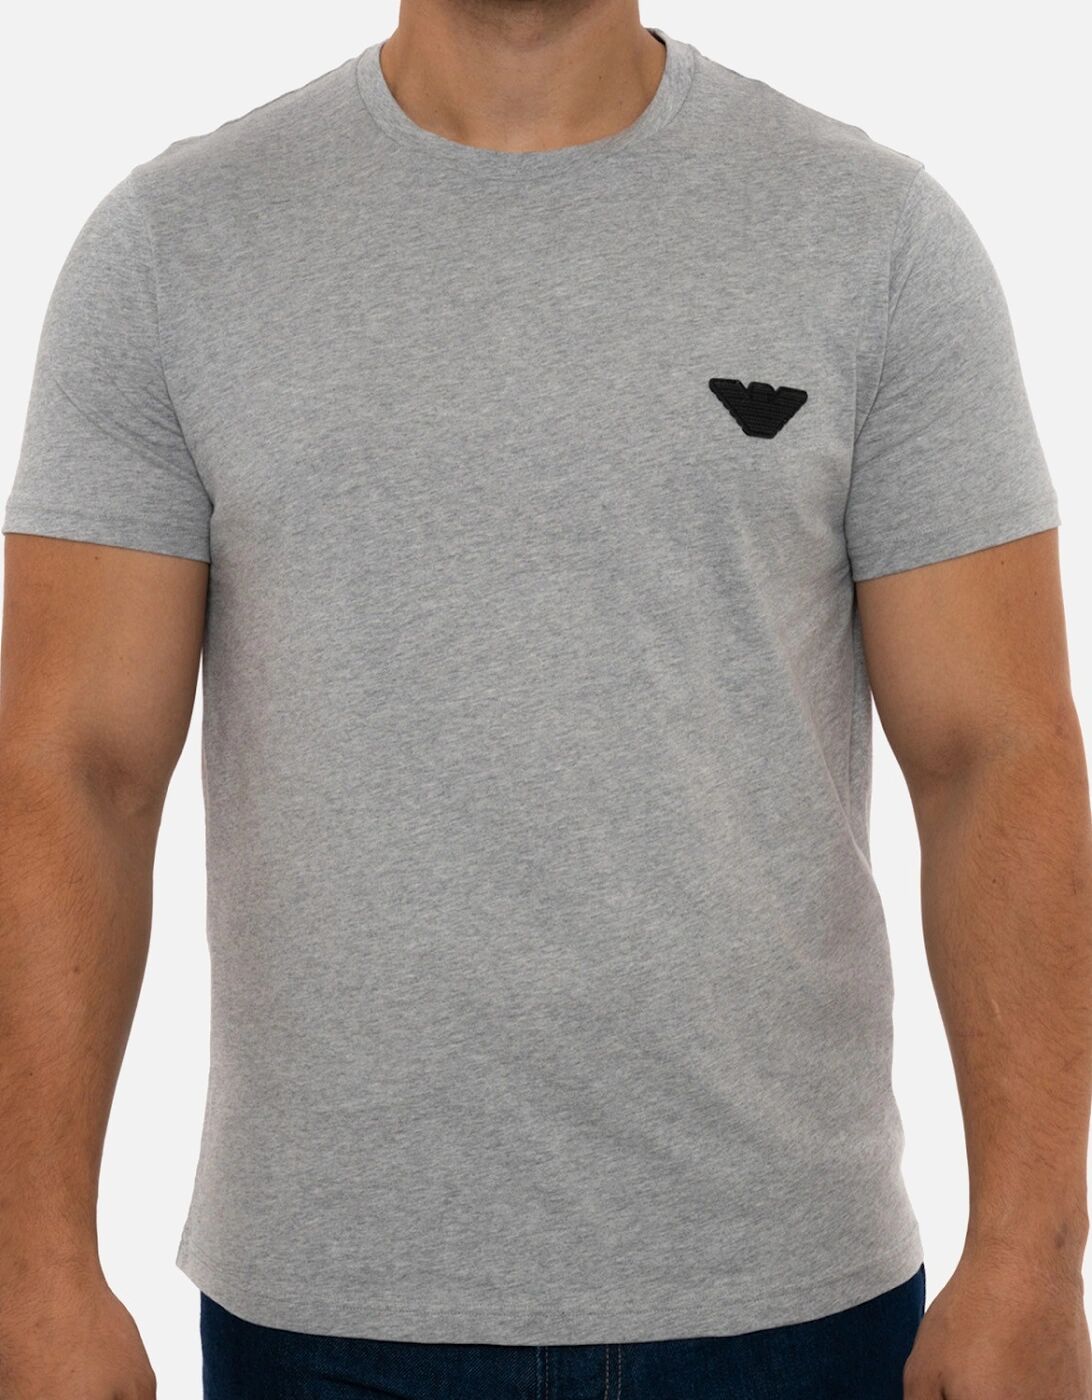 Men's Emporio Armani Underwear Mens Badge Logo T-Shirt (Grey) - Size: 40/Regular